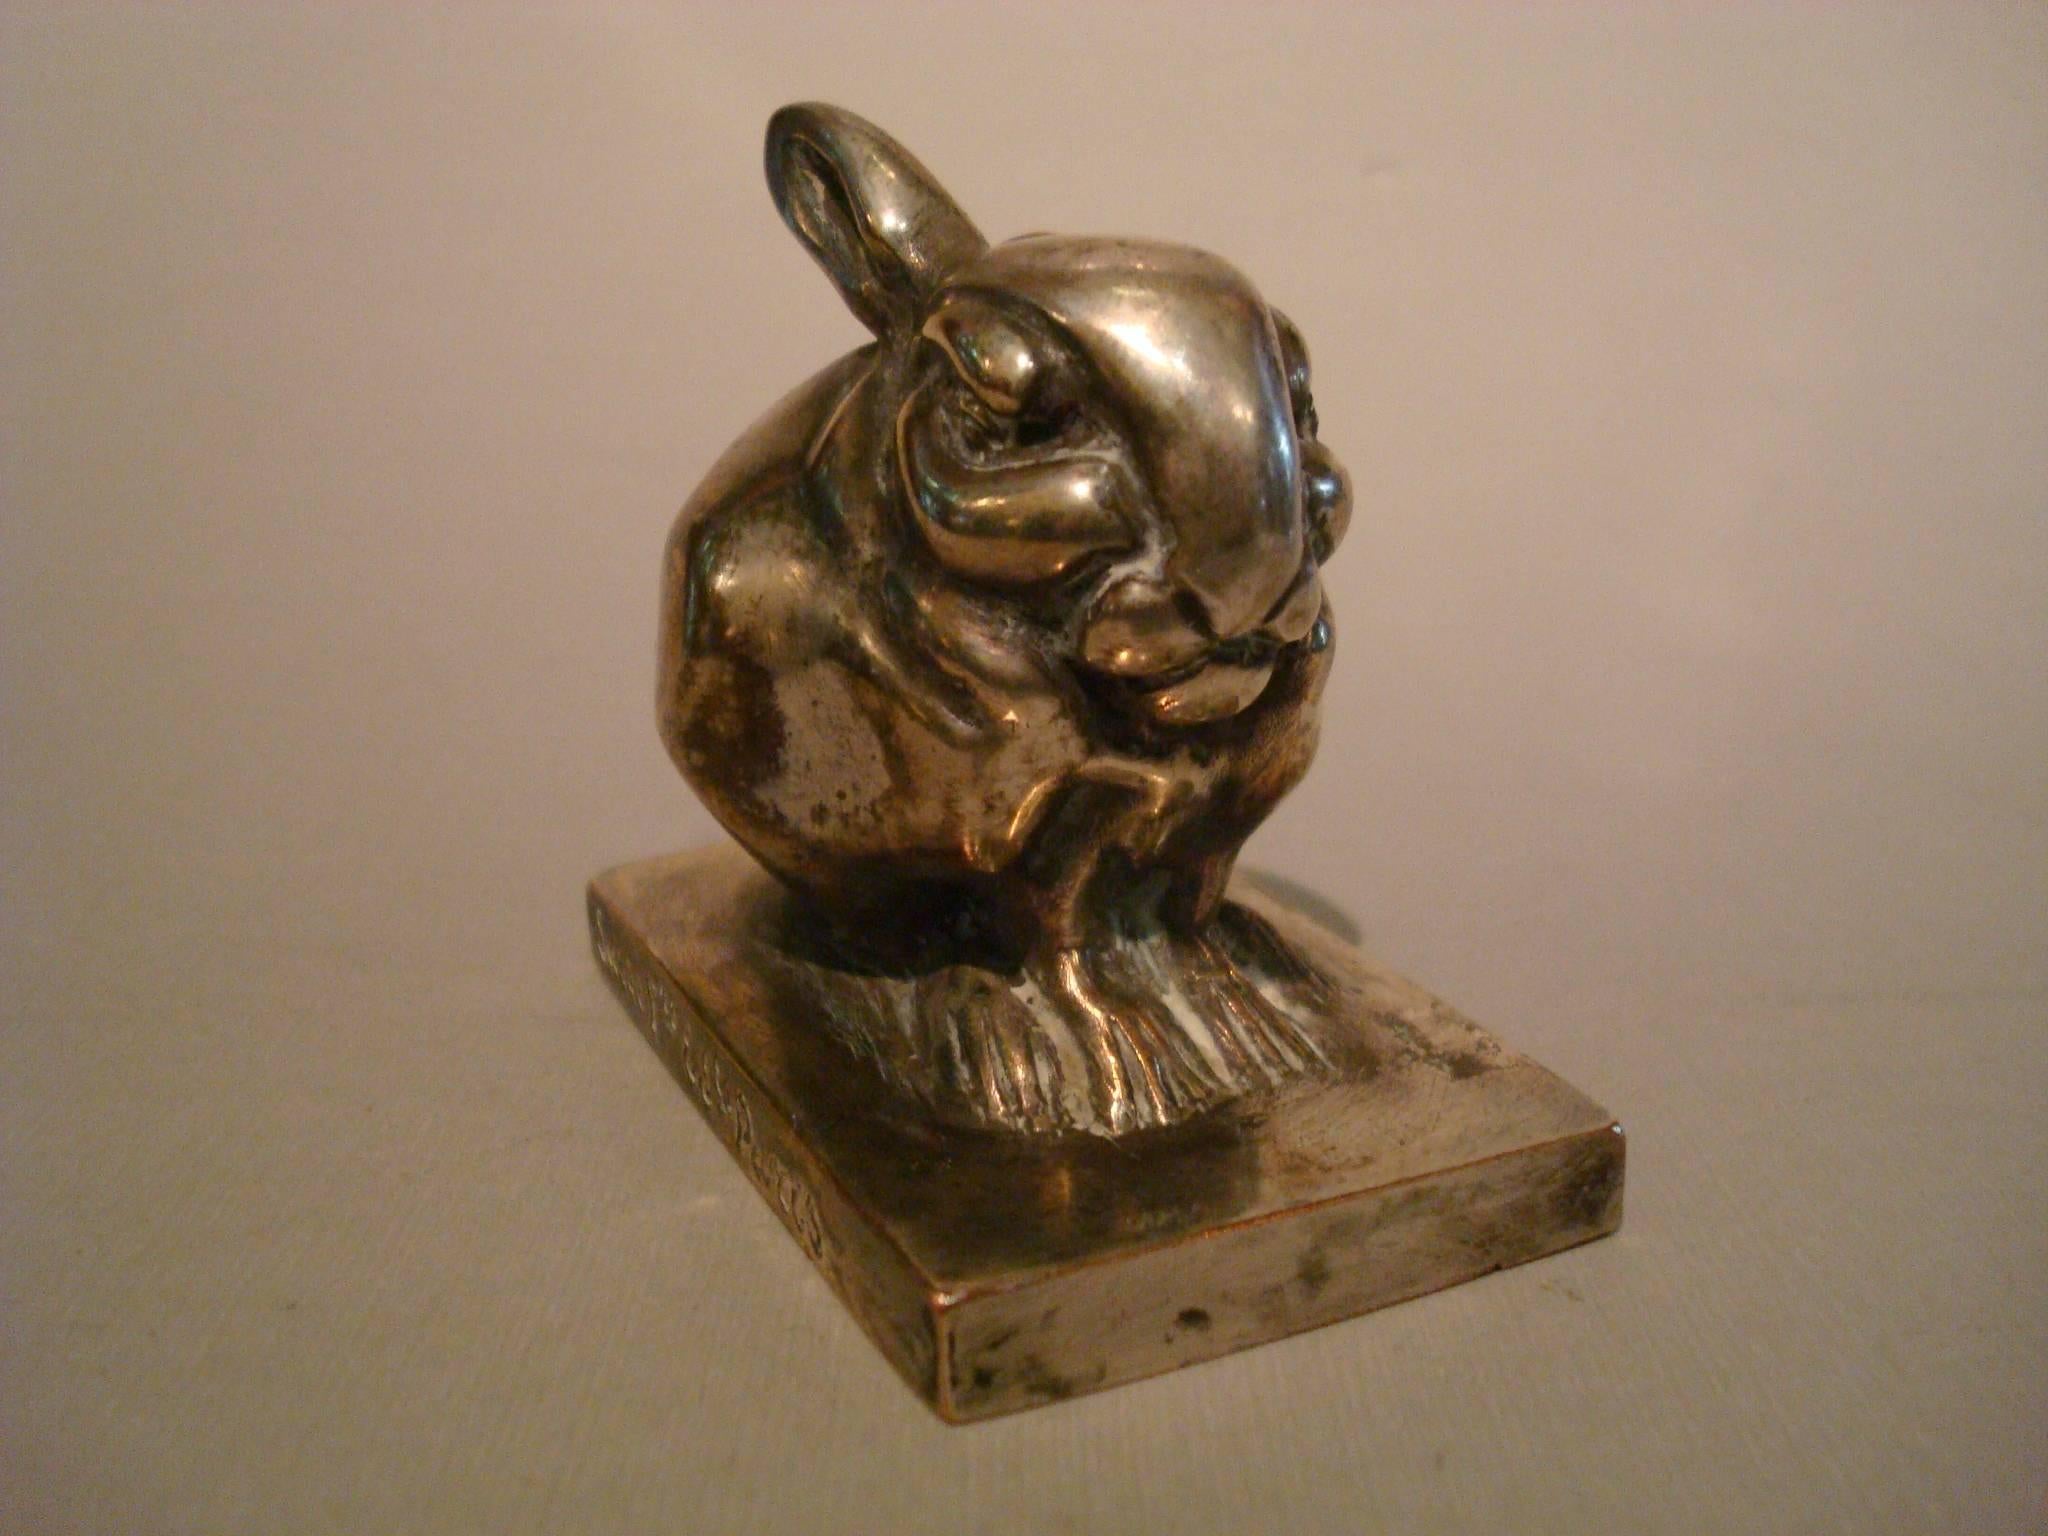 Art Deco Edouard Marcel Sandoz little silvered bronze lapin rabbit, signed on the base Ed. M. Sandoz and Susse Freres Paris.